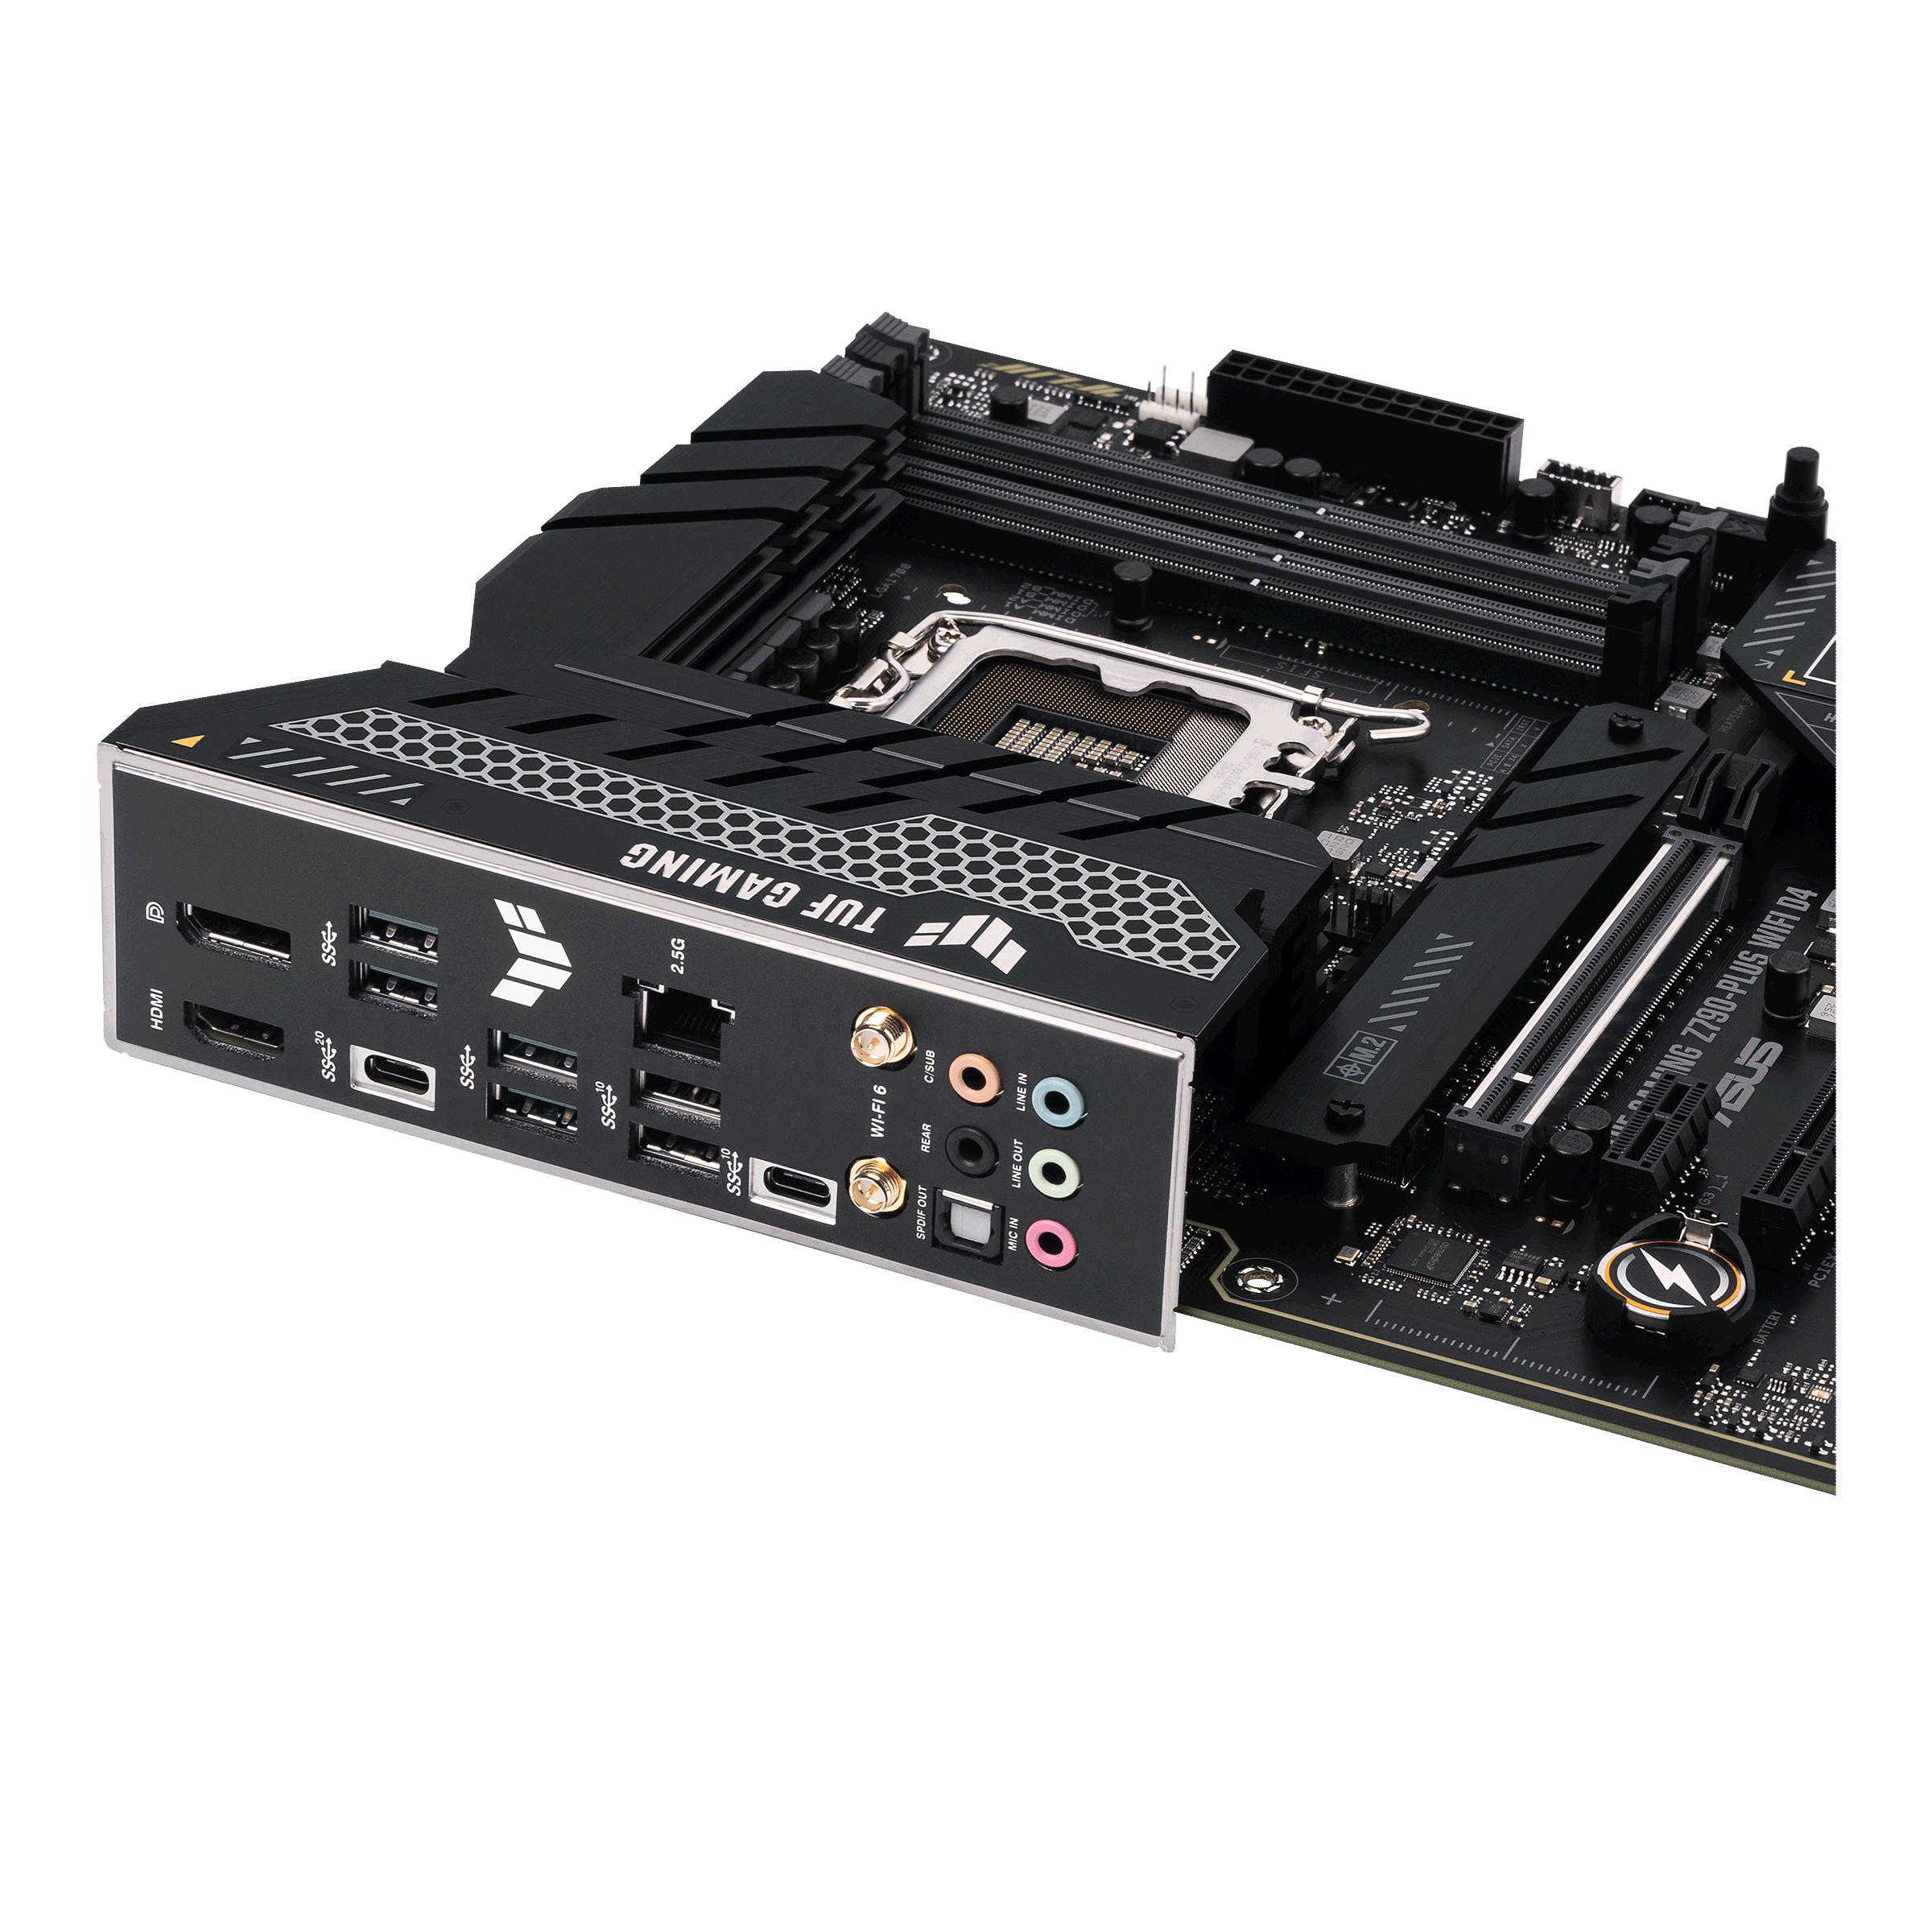 ASUS TUF Gaming Z790-Plus WIFI D4 (DDR4) - Intel Z790 - So. 1700 - ATX